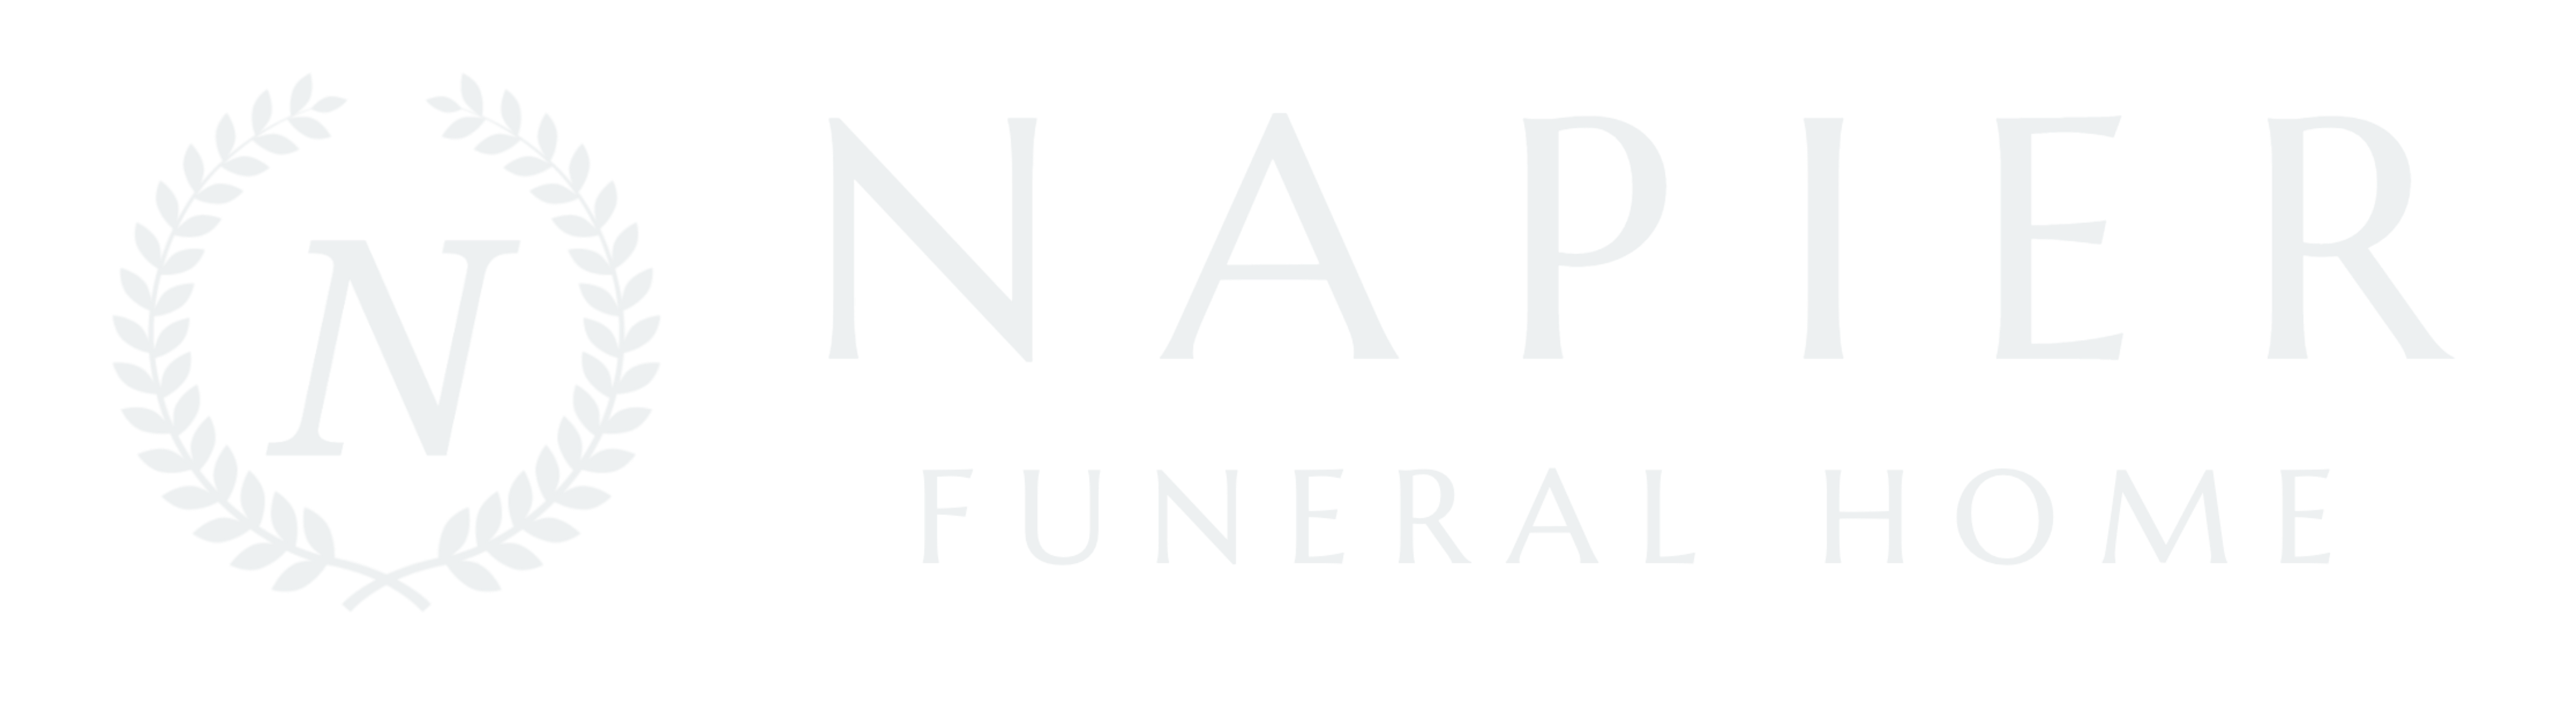 Napier Funeral Home Logo